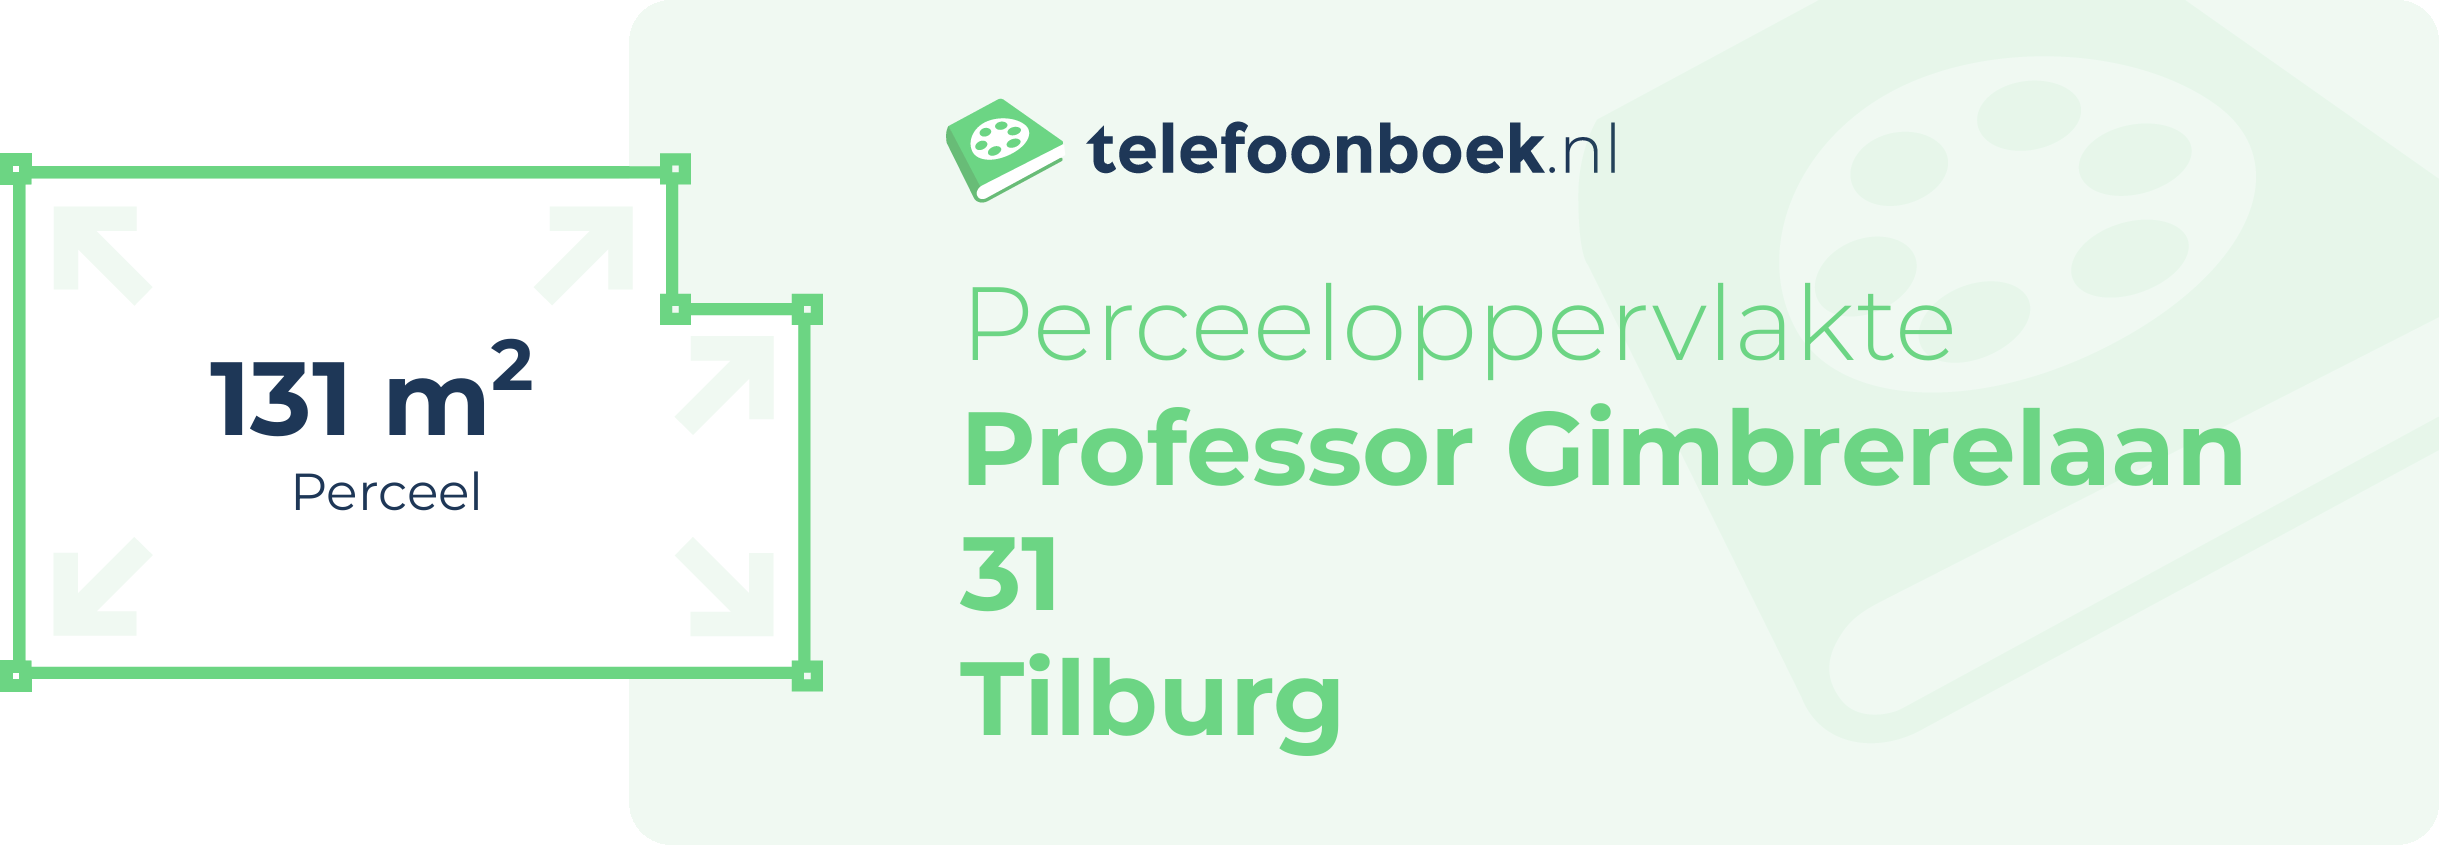 Perceeloppervlakte Professor Gimbrerelaan 31 Tilburg